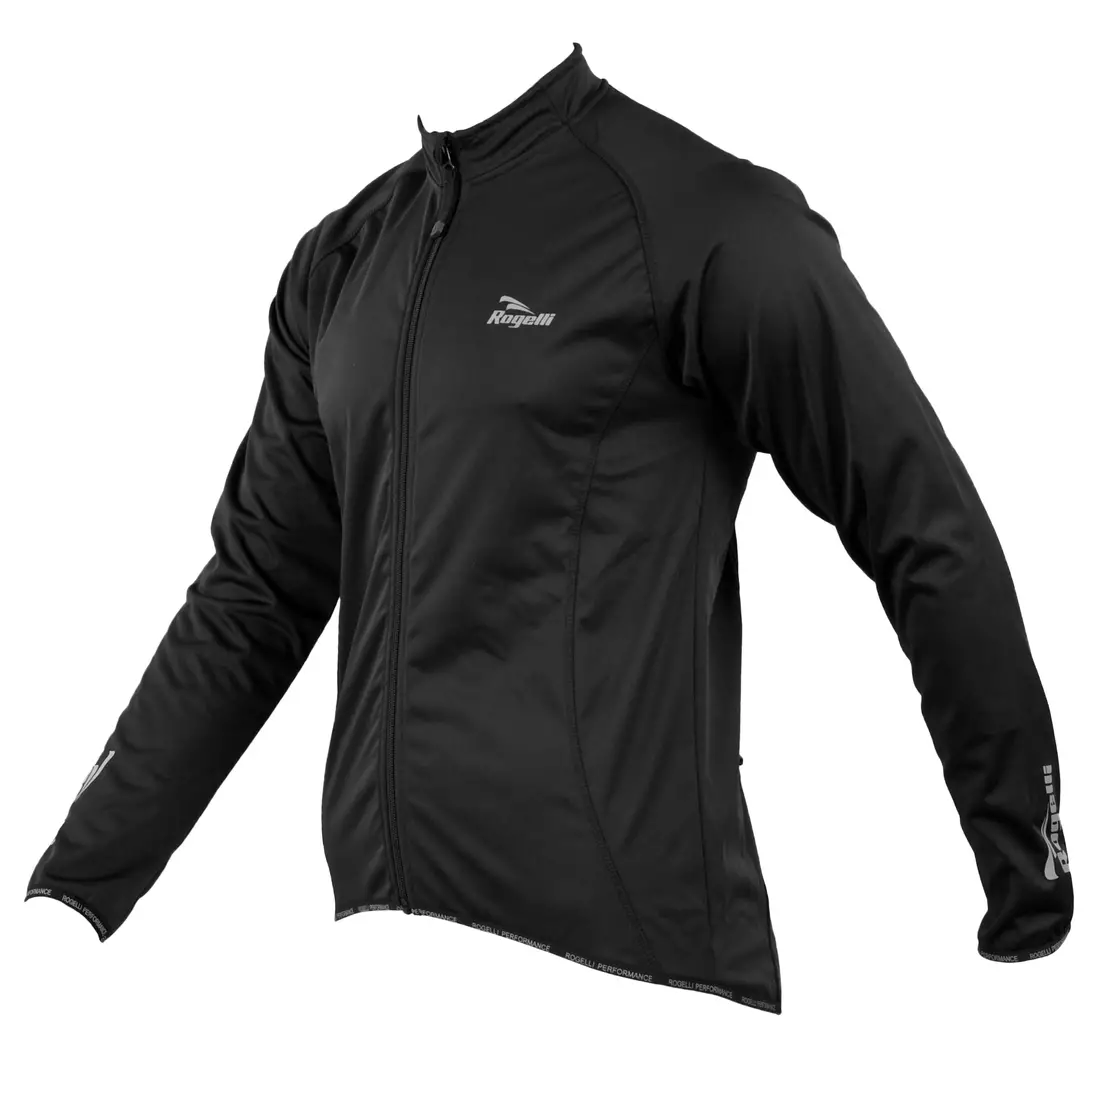 ROGELLI PESARO - men's Softshell cycling jacket, color: Black